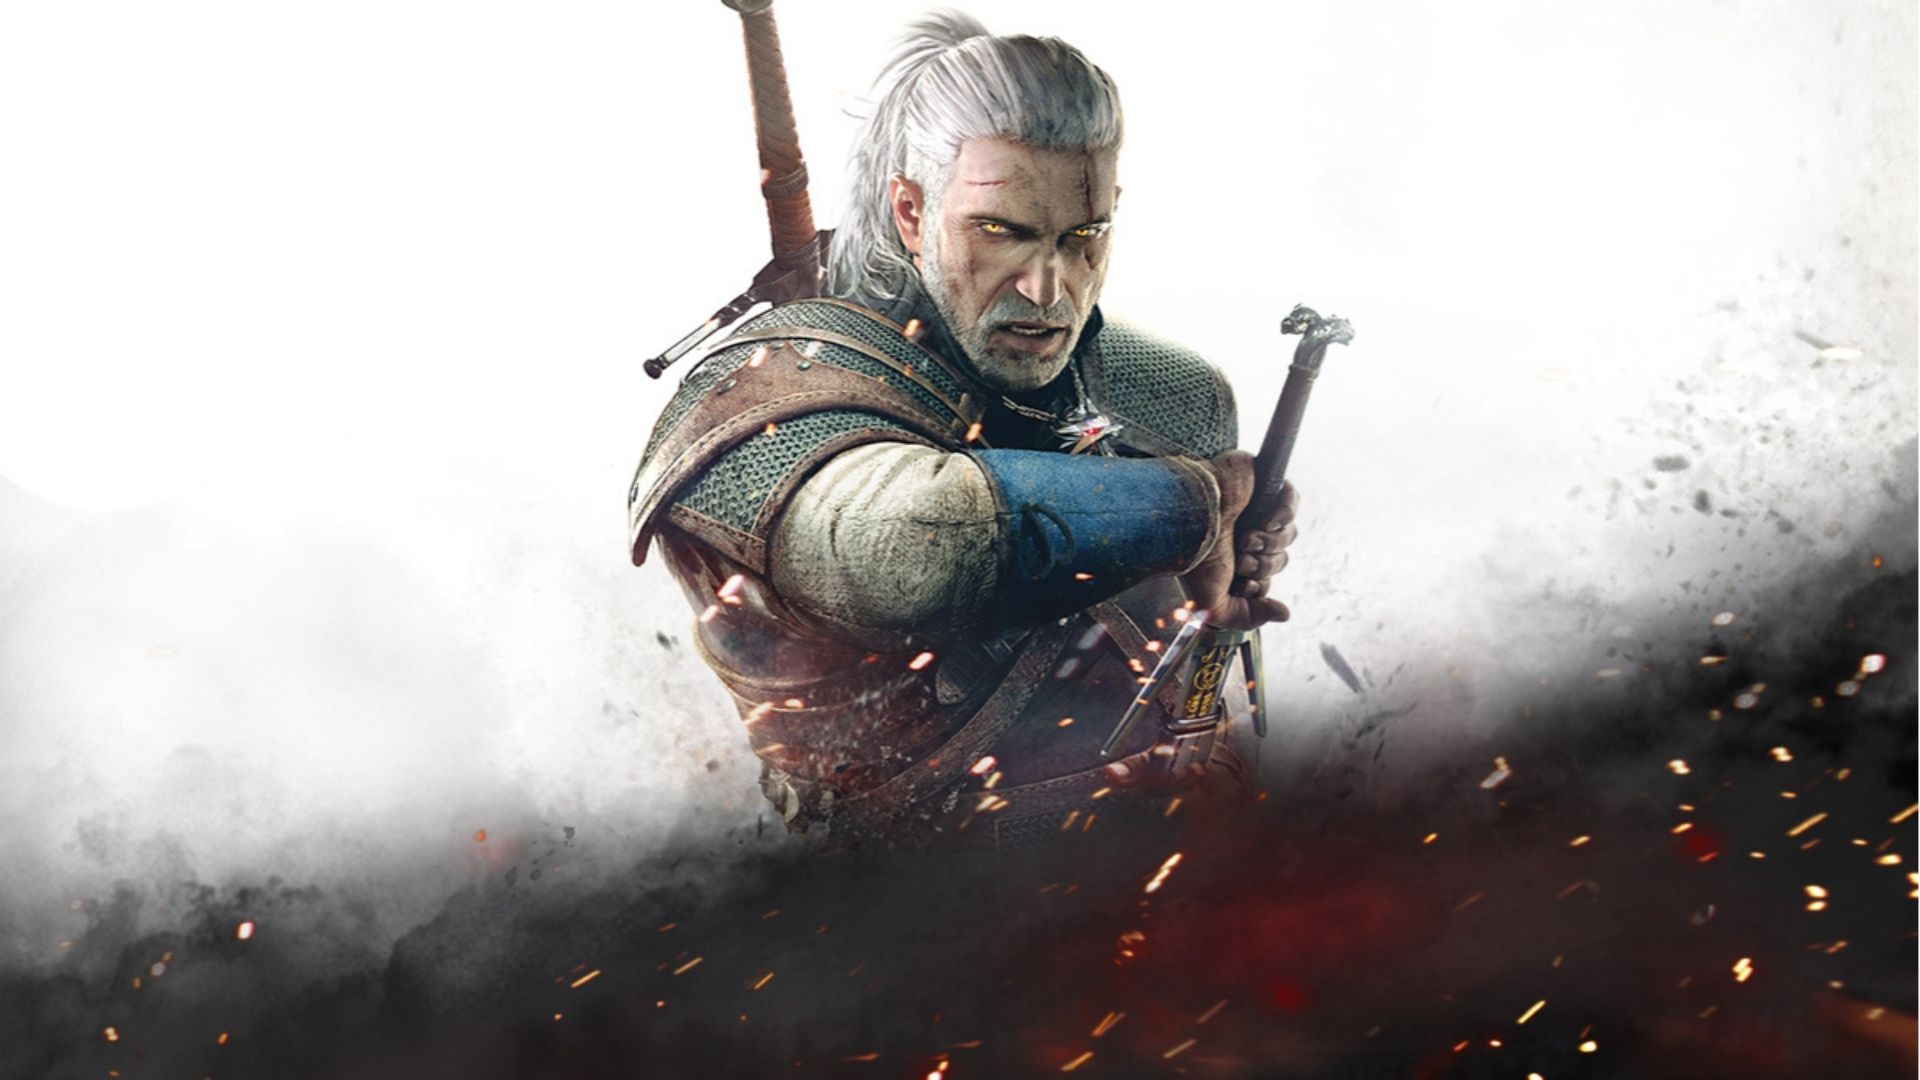 Geralt draws his sword